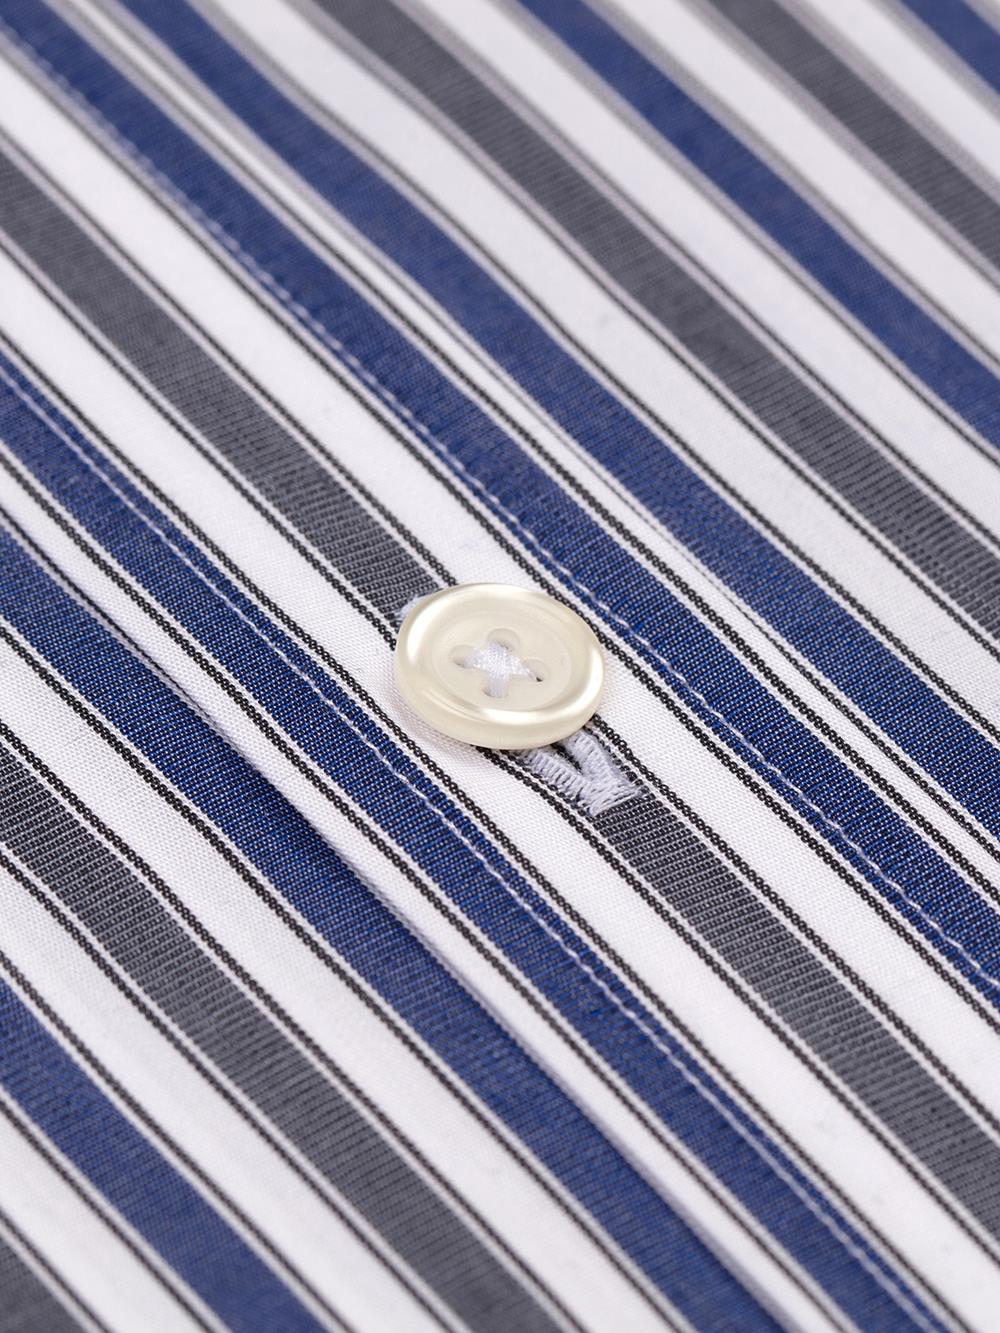 Robin navy and grey striped shirt - Button-down collar